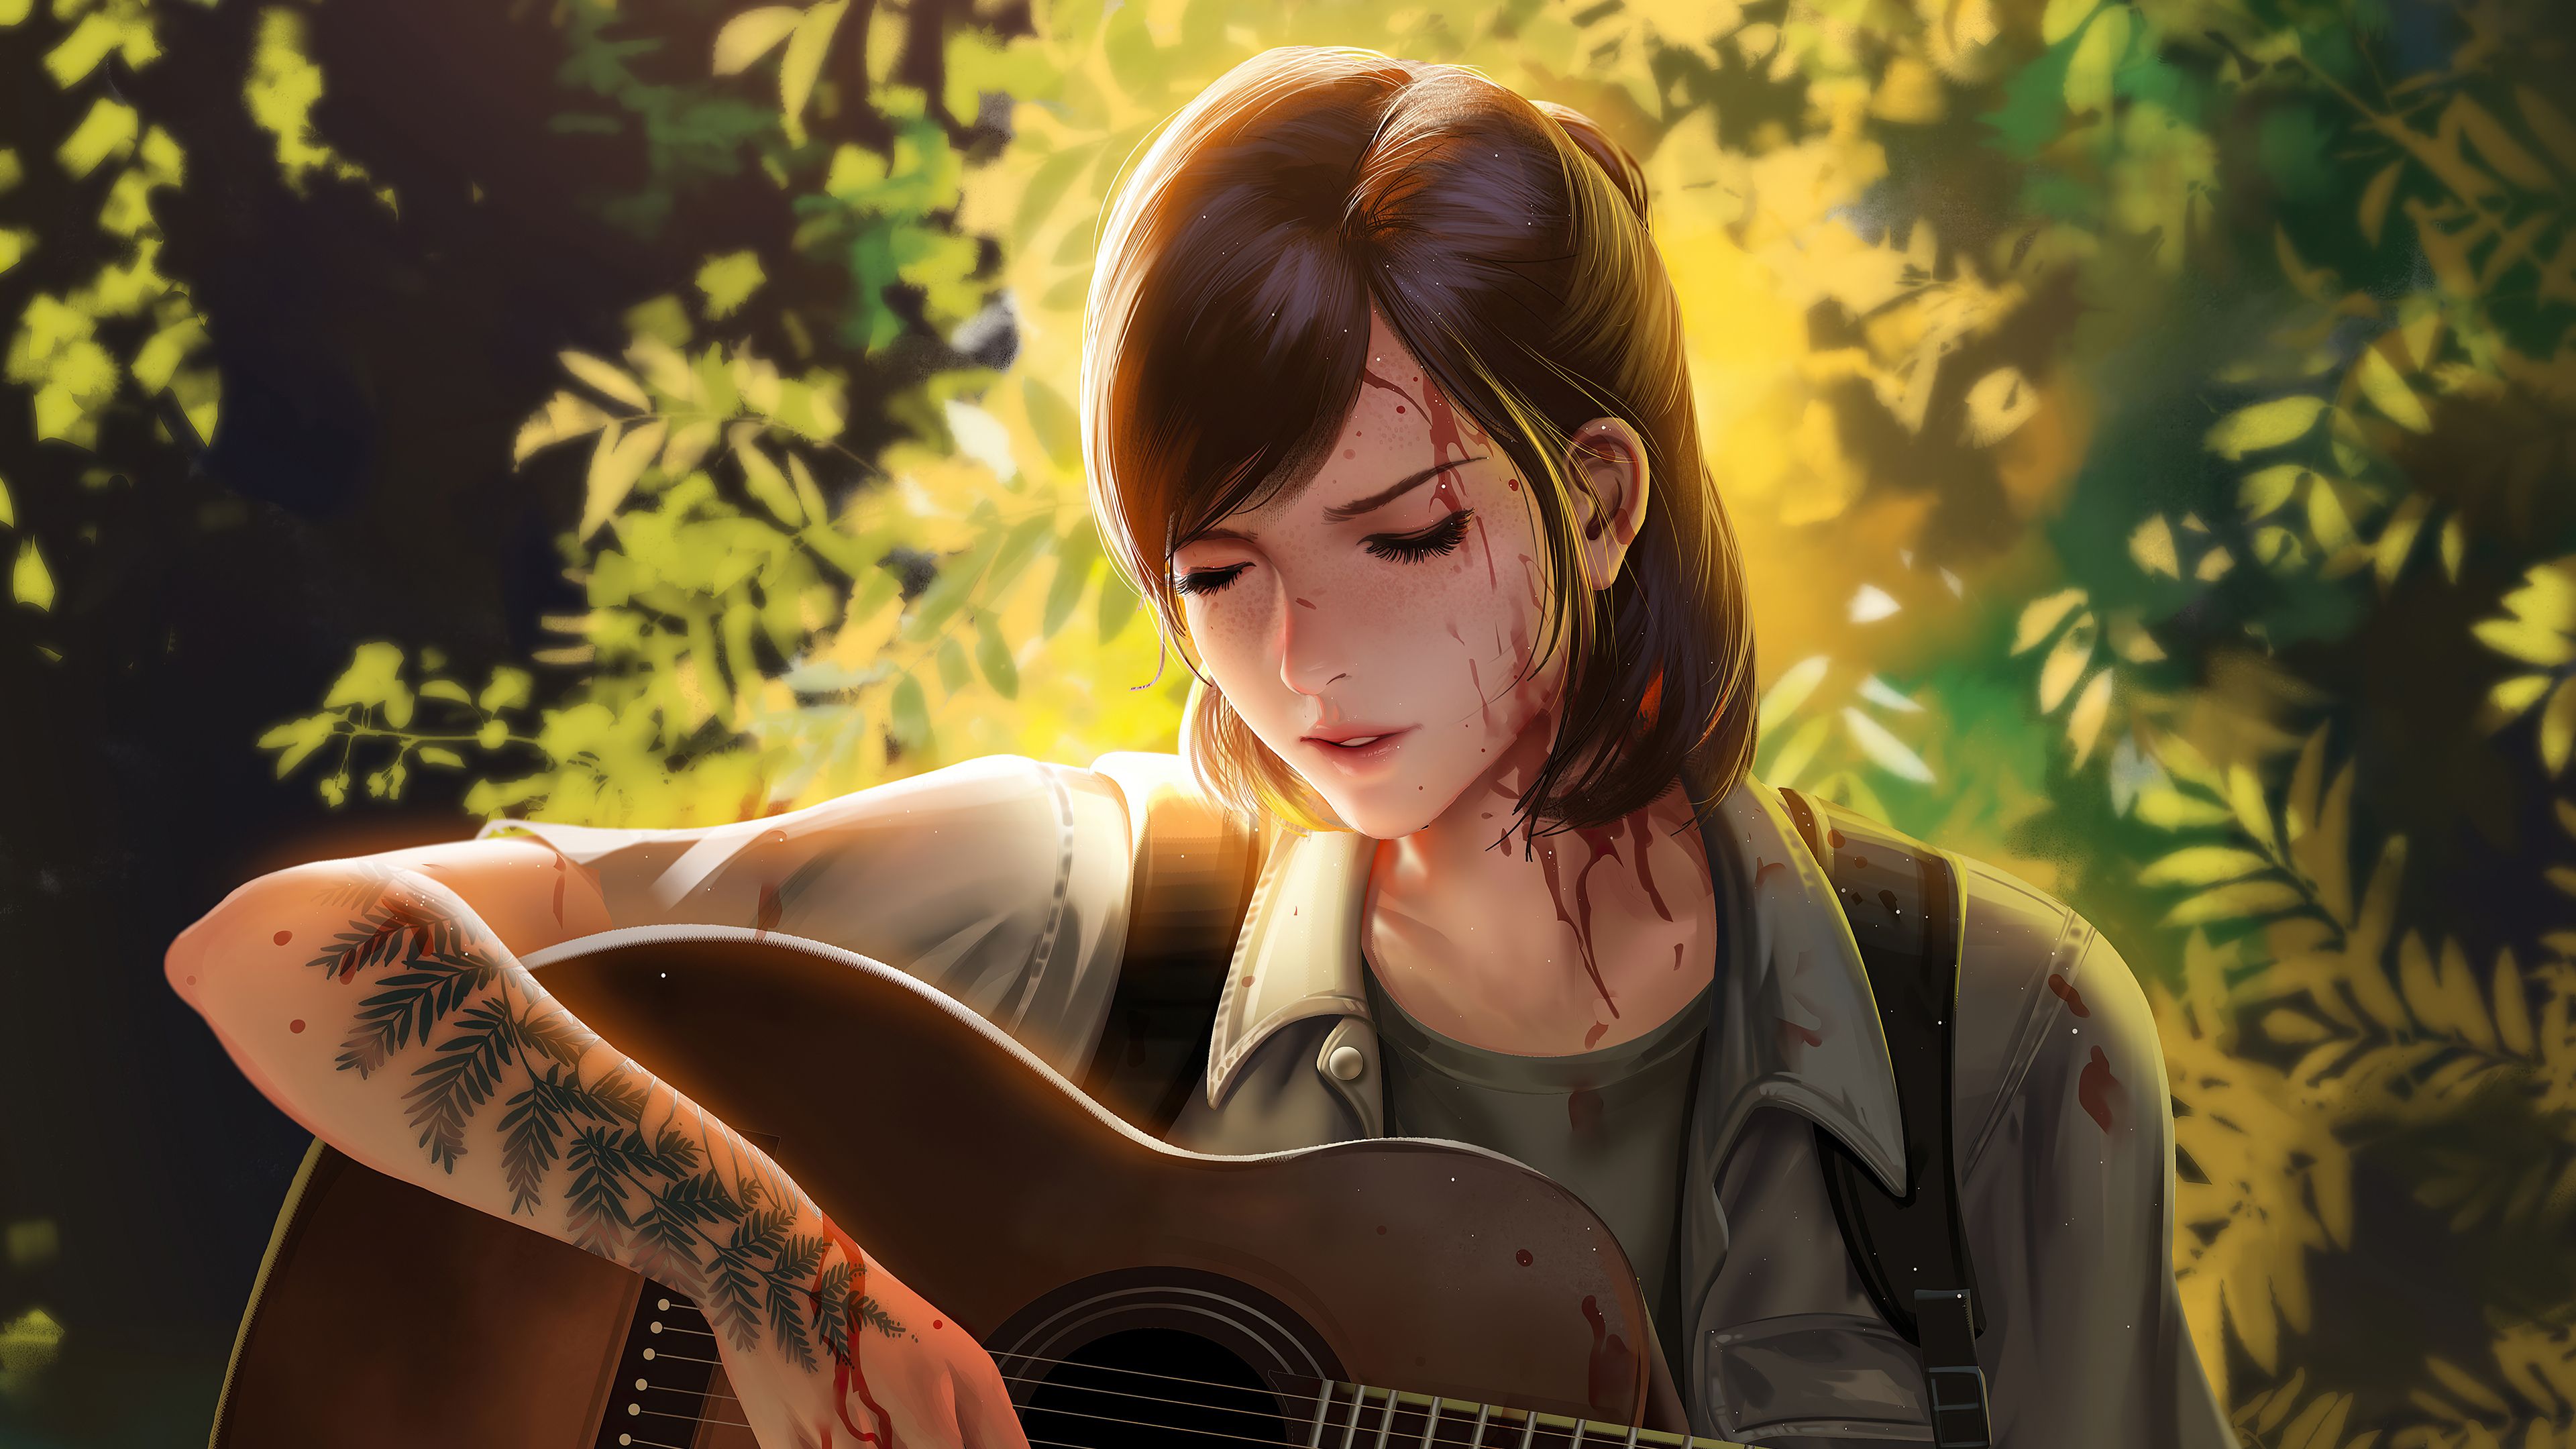 Artwork Ellie Williams The Last Of Us The Last Of Us 2 Digital Art Fan Art Digital Painting Guitar T Wallpaper:3840x2160